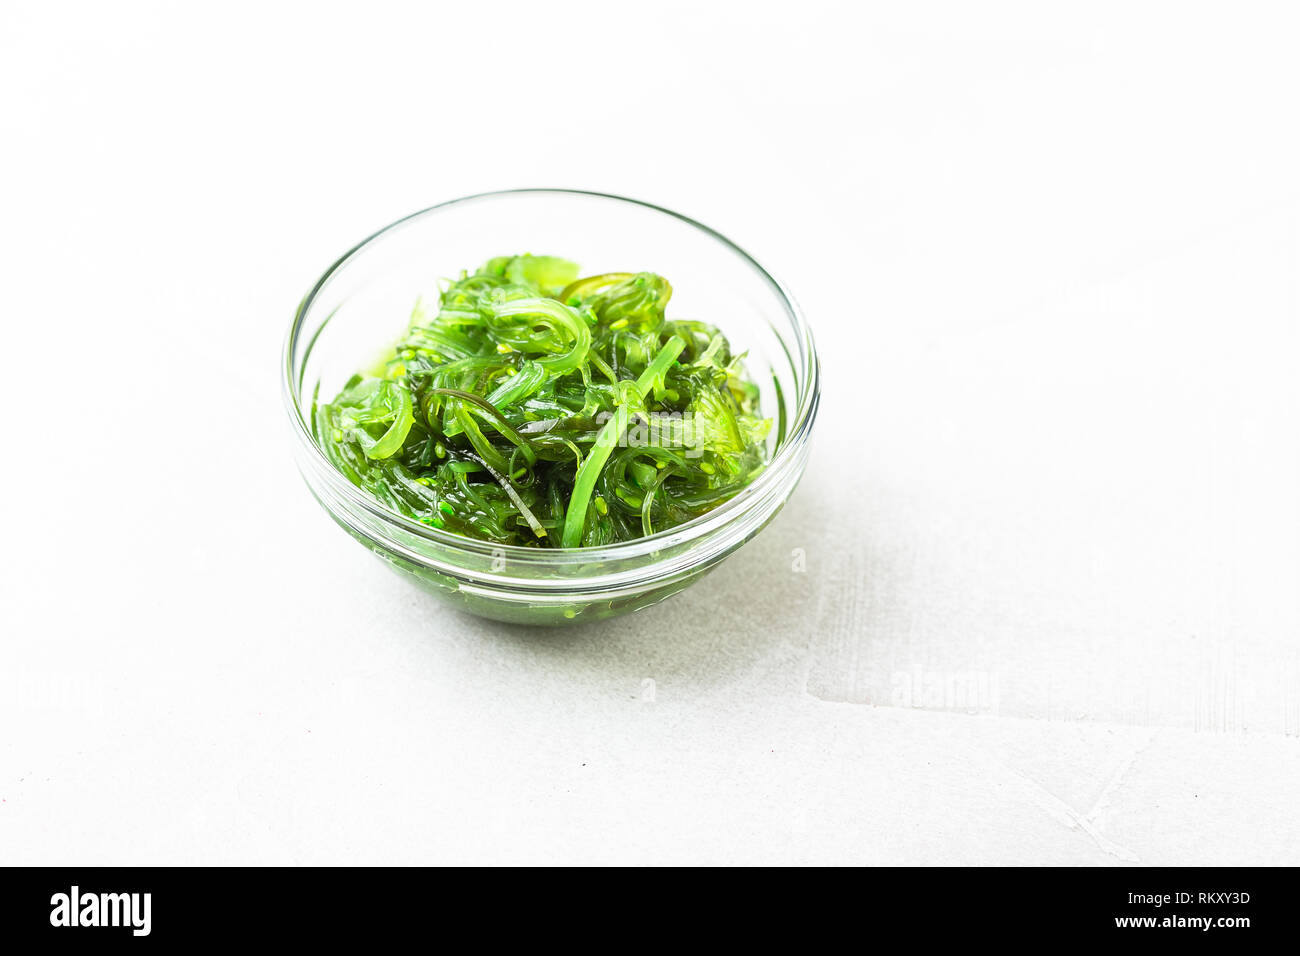 Hiyashi Wakame Chuka Or Seaweed Salad In Bowl On White Background